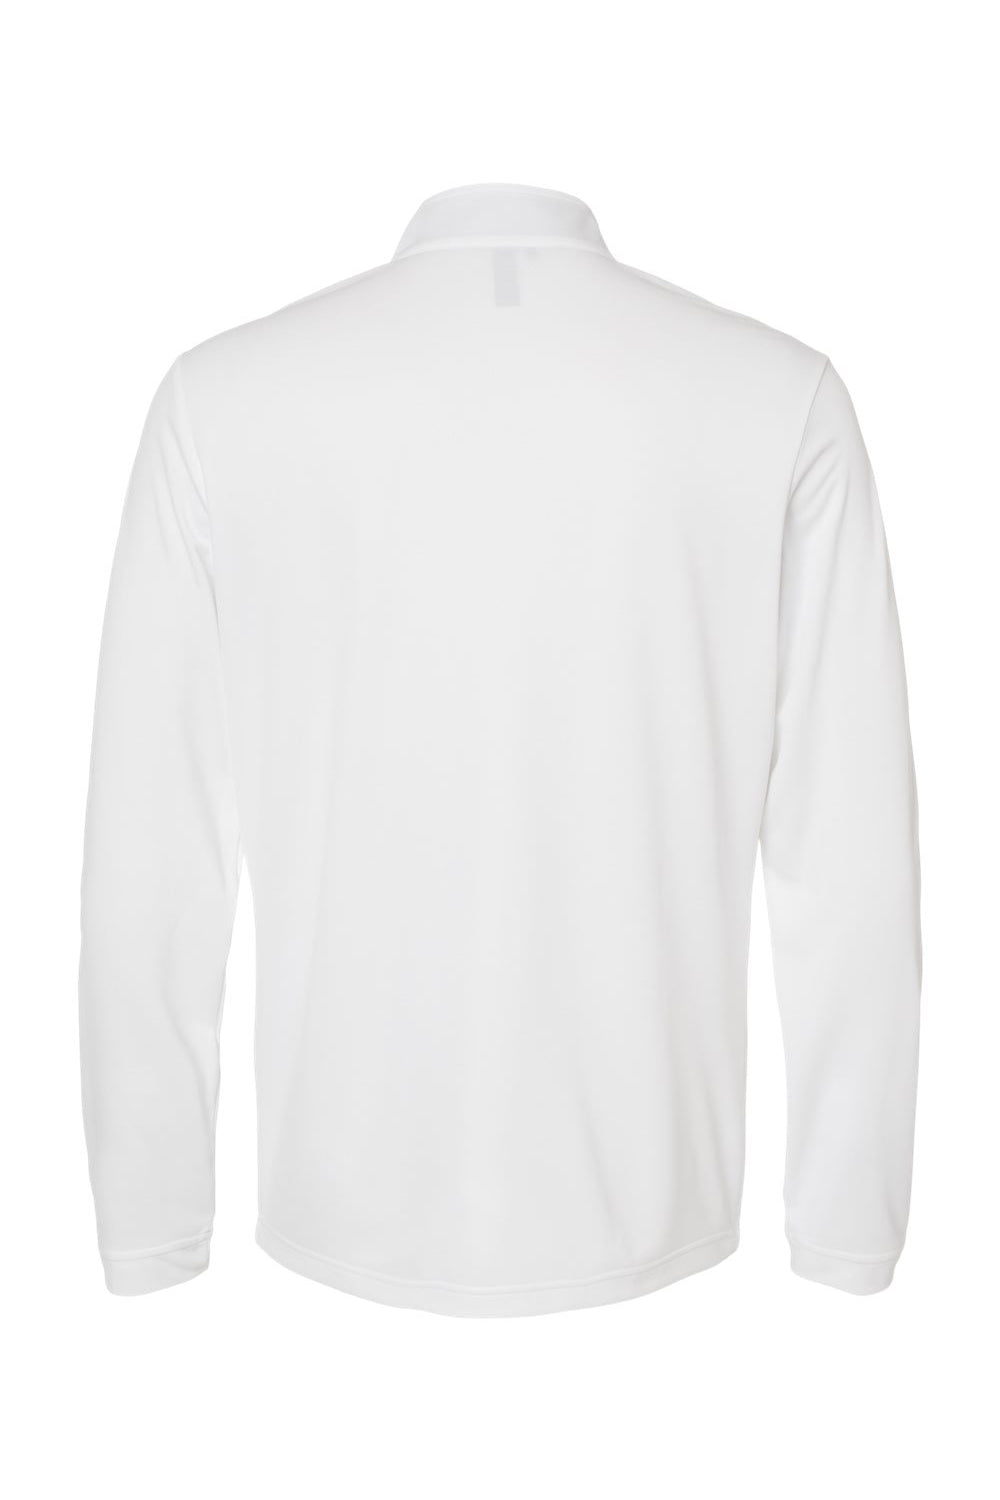 Adidas A280 Mens UPF 50+ 1/4 Zip Sweatshirt White/Carbon Grey Flat Back